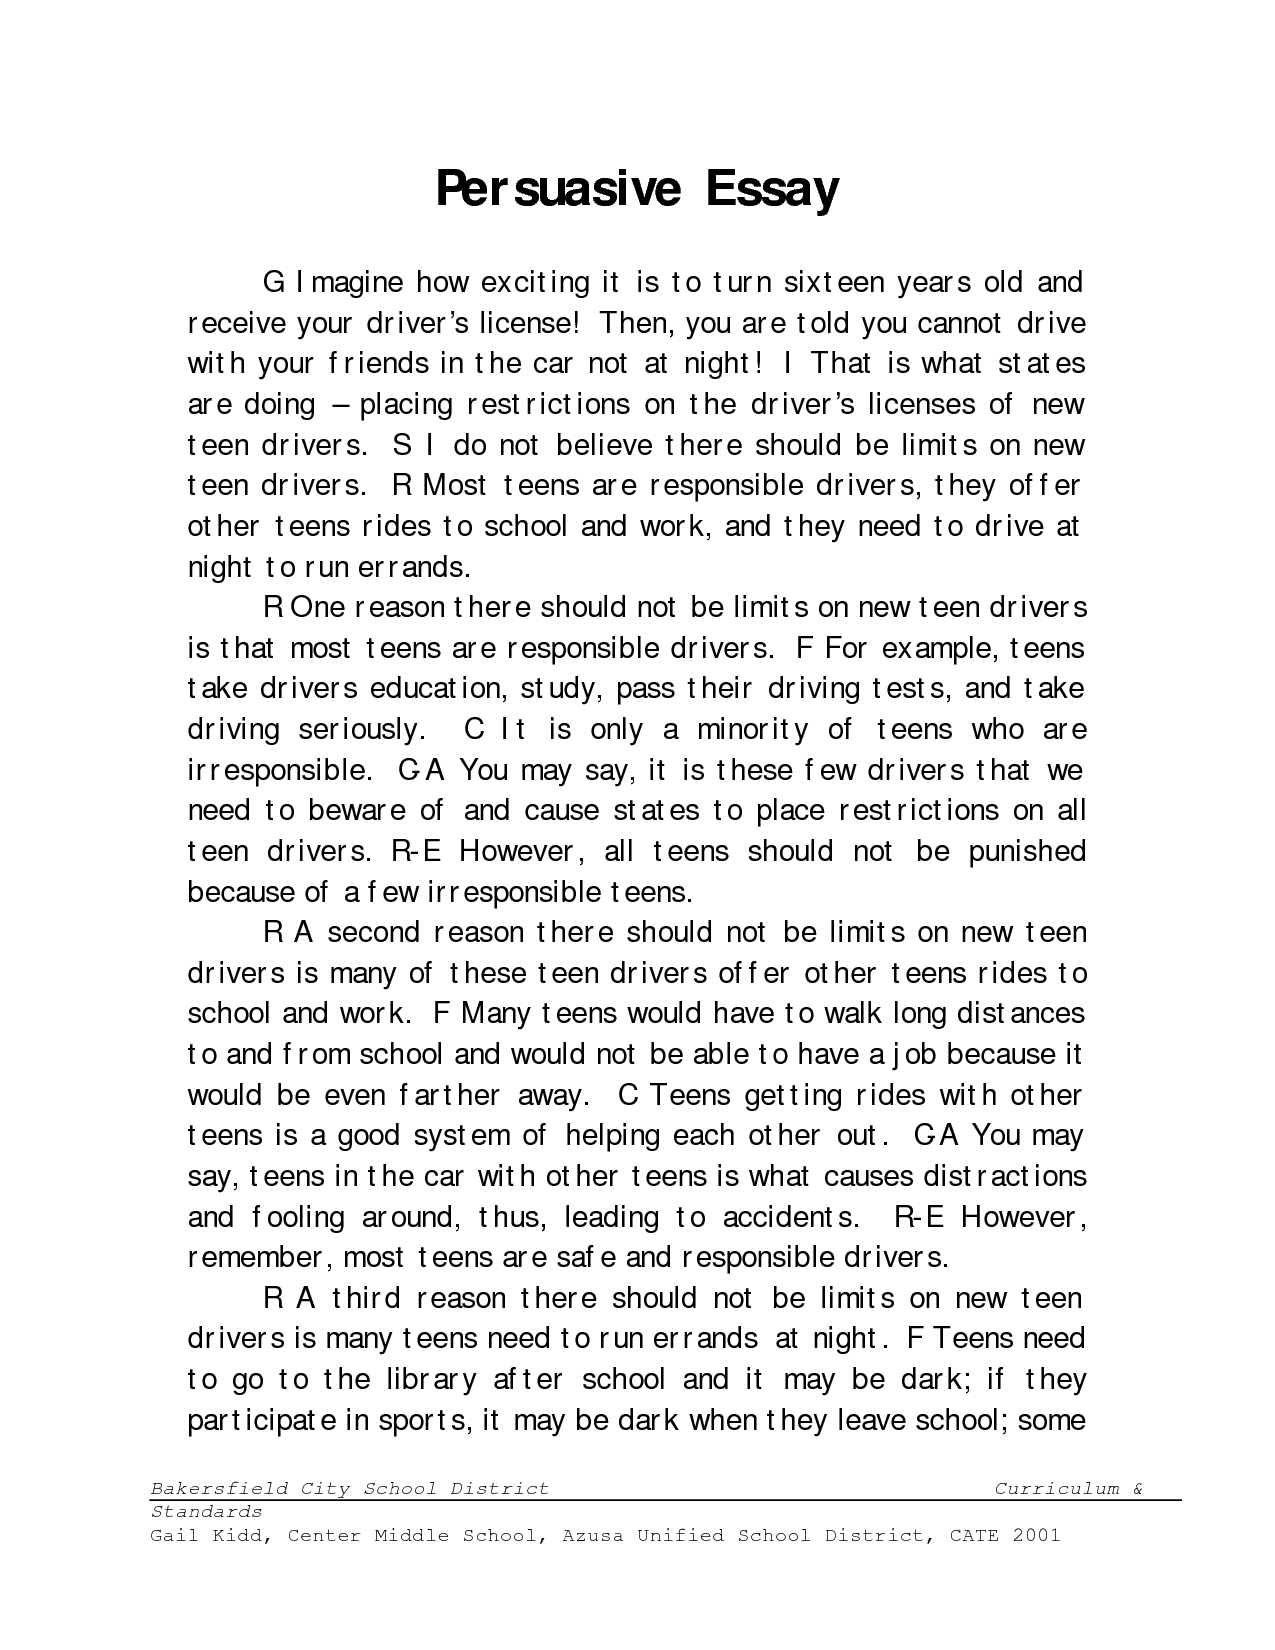 Persuasive speech essay examples